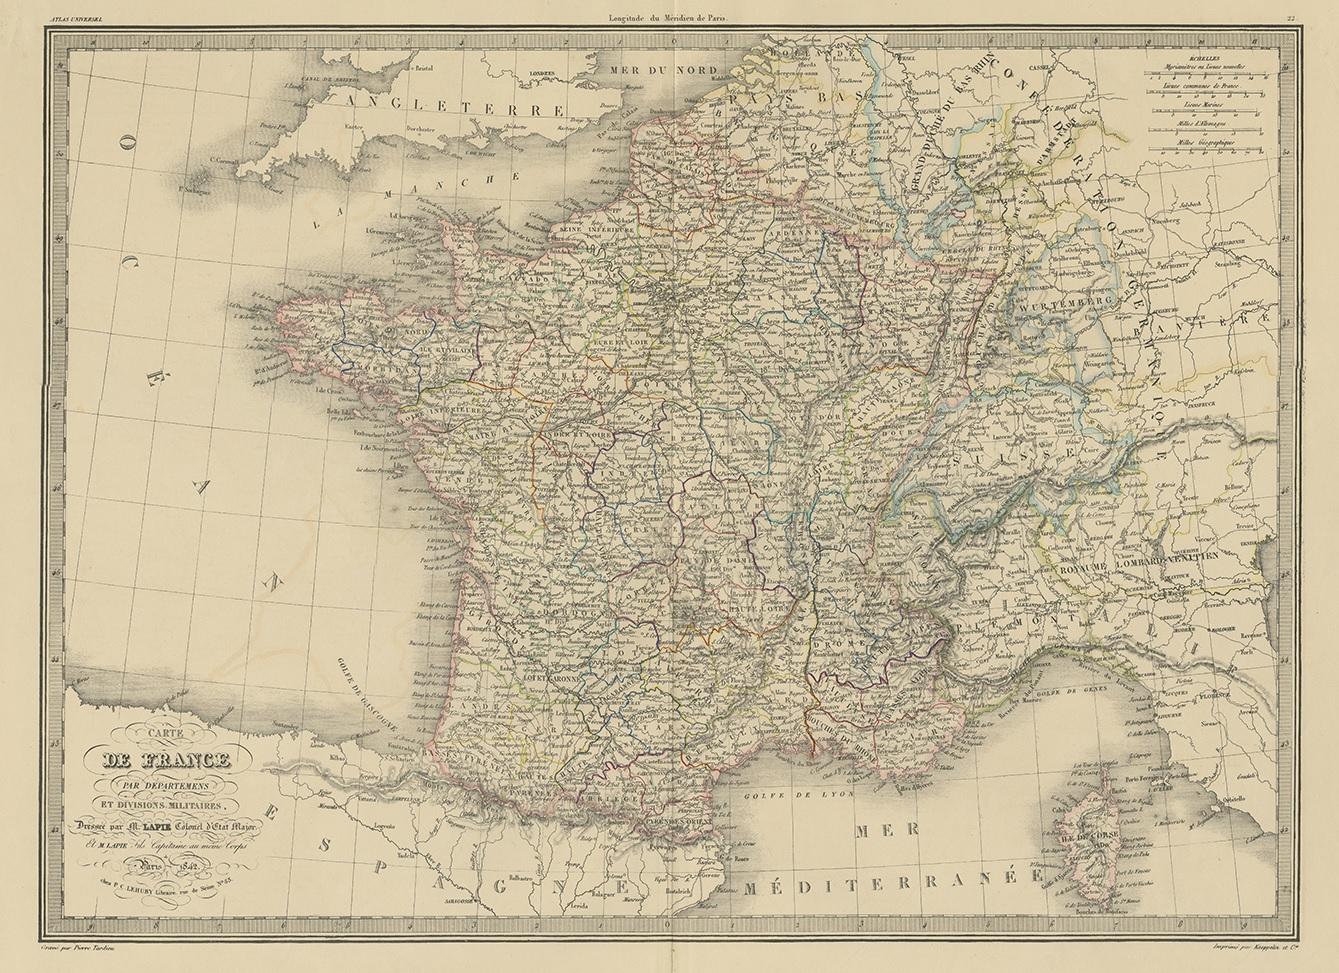 Antique map titled 'Carte de France'. Map of France. This map originates from 'Atlas universel de géographie ancienne et moderne (..)' by Pierre M. Lapie and Alexandre E. Lapie. Pierre M. Lapie was a French cartographer and engraver. He was the